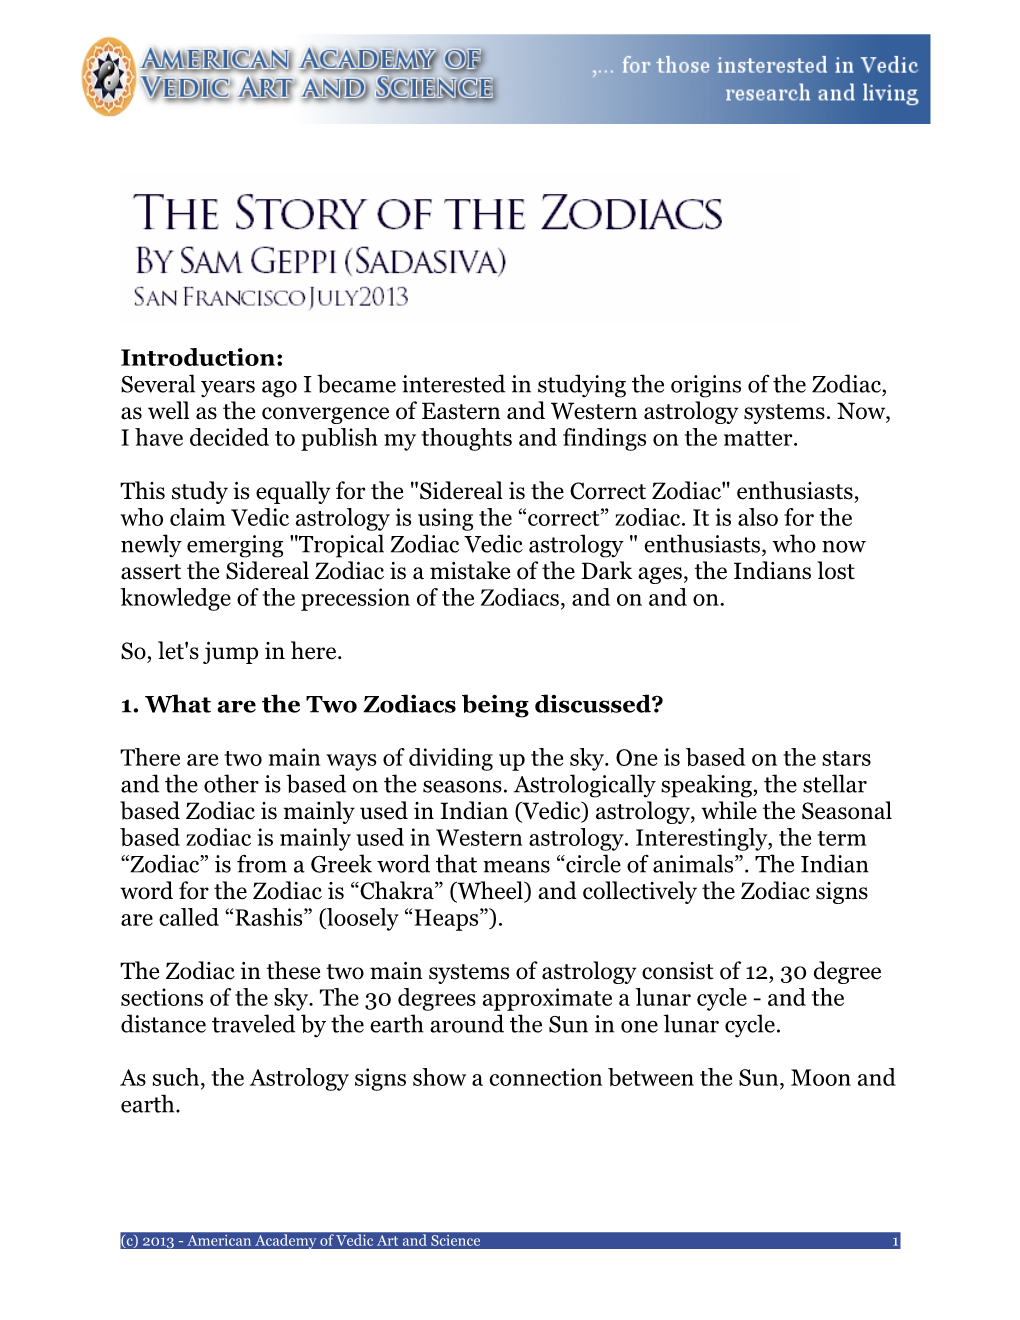 Story of the Zodiac-616 2